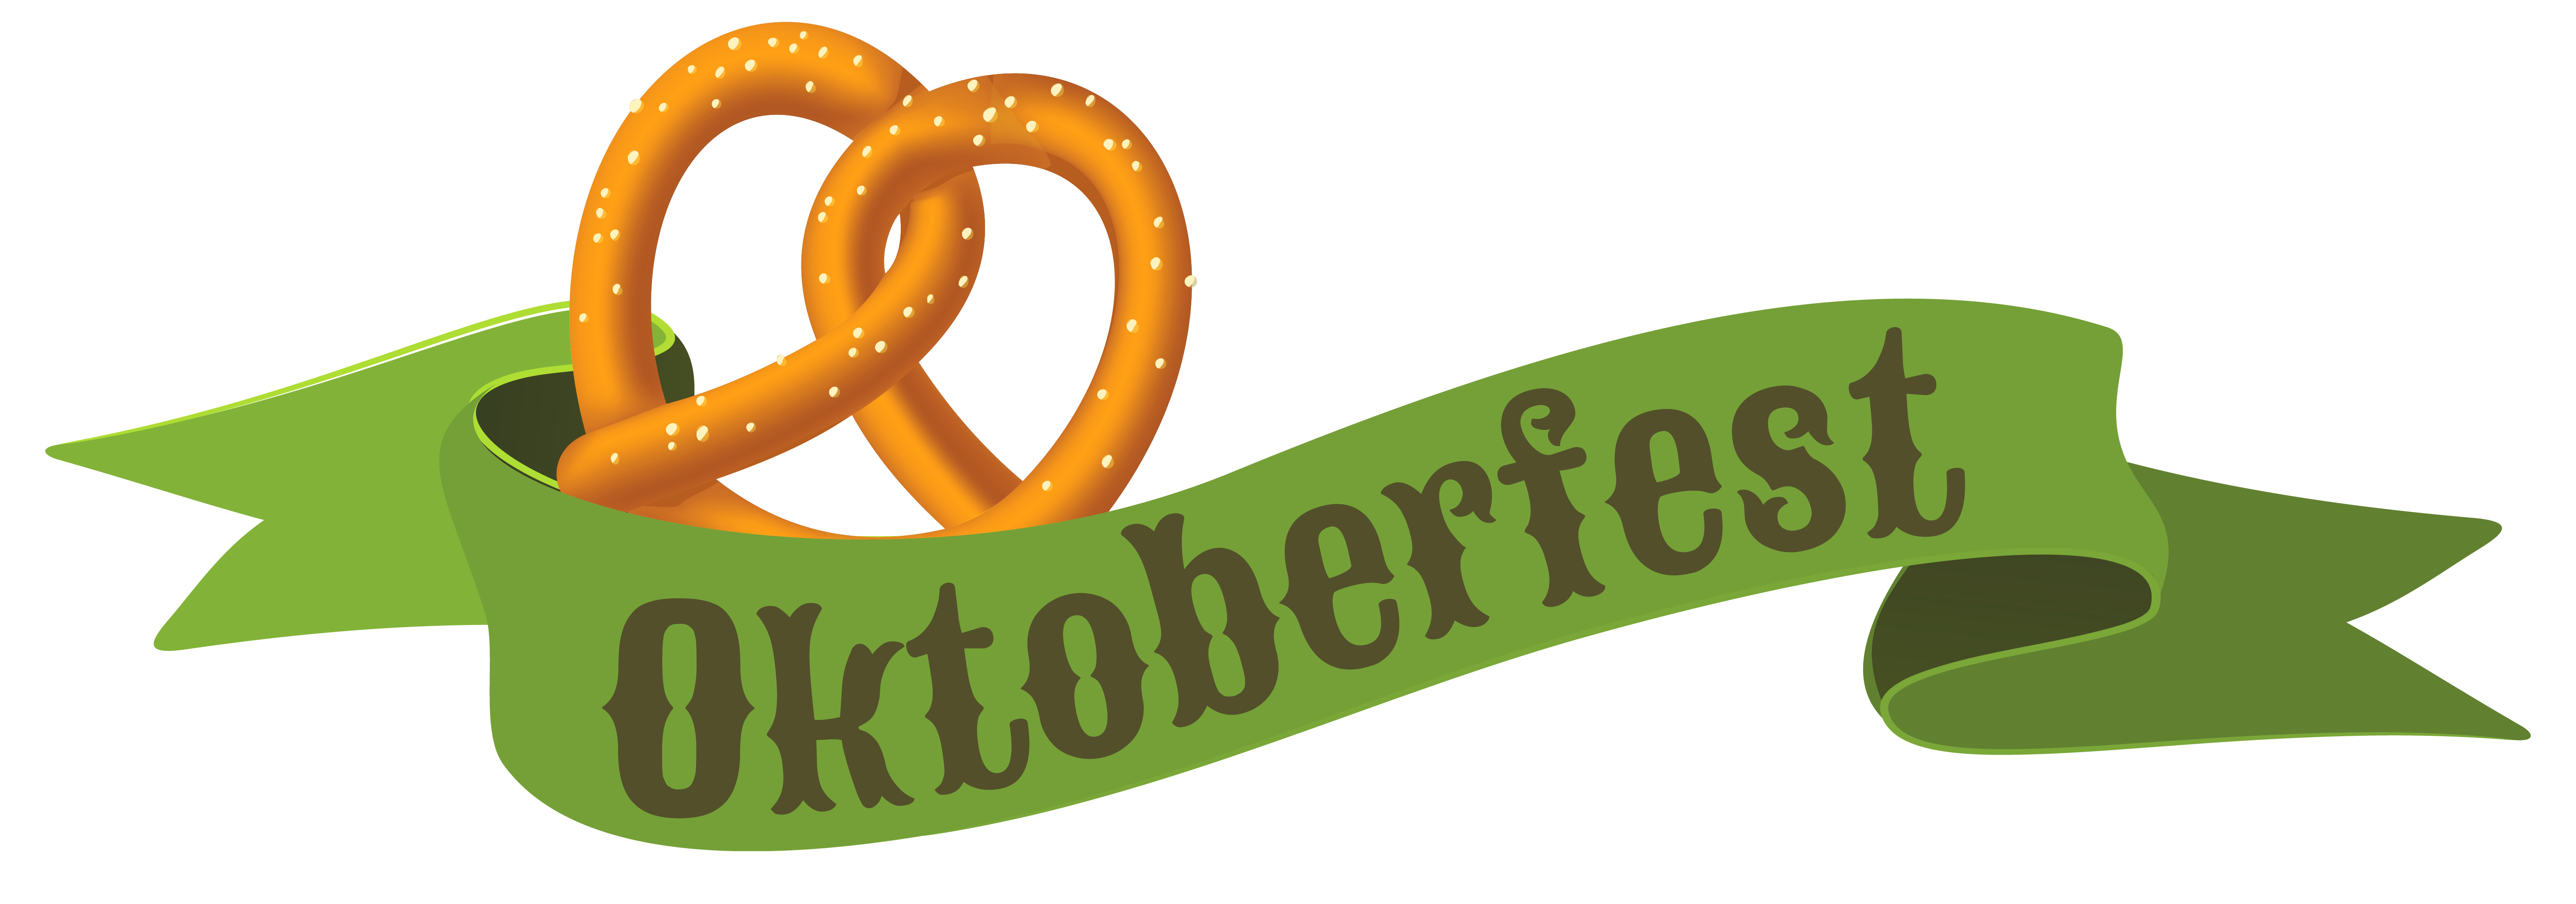 Oktoberfest clipart - ClipartFest